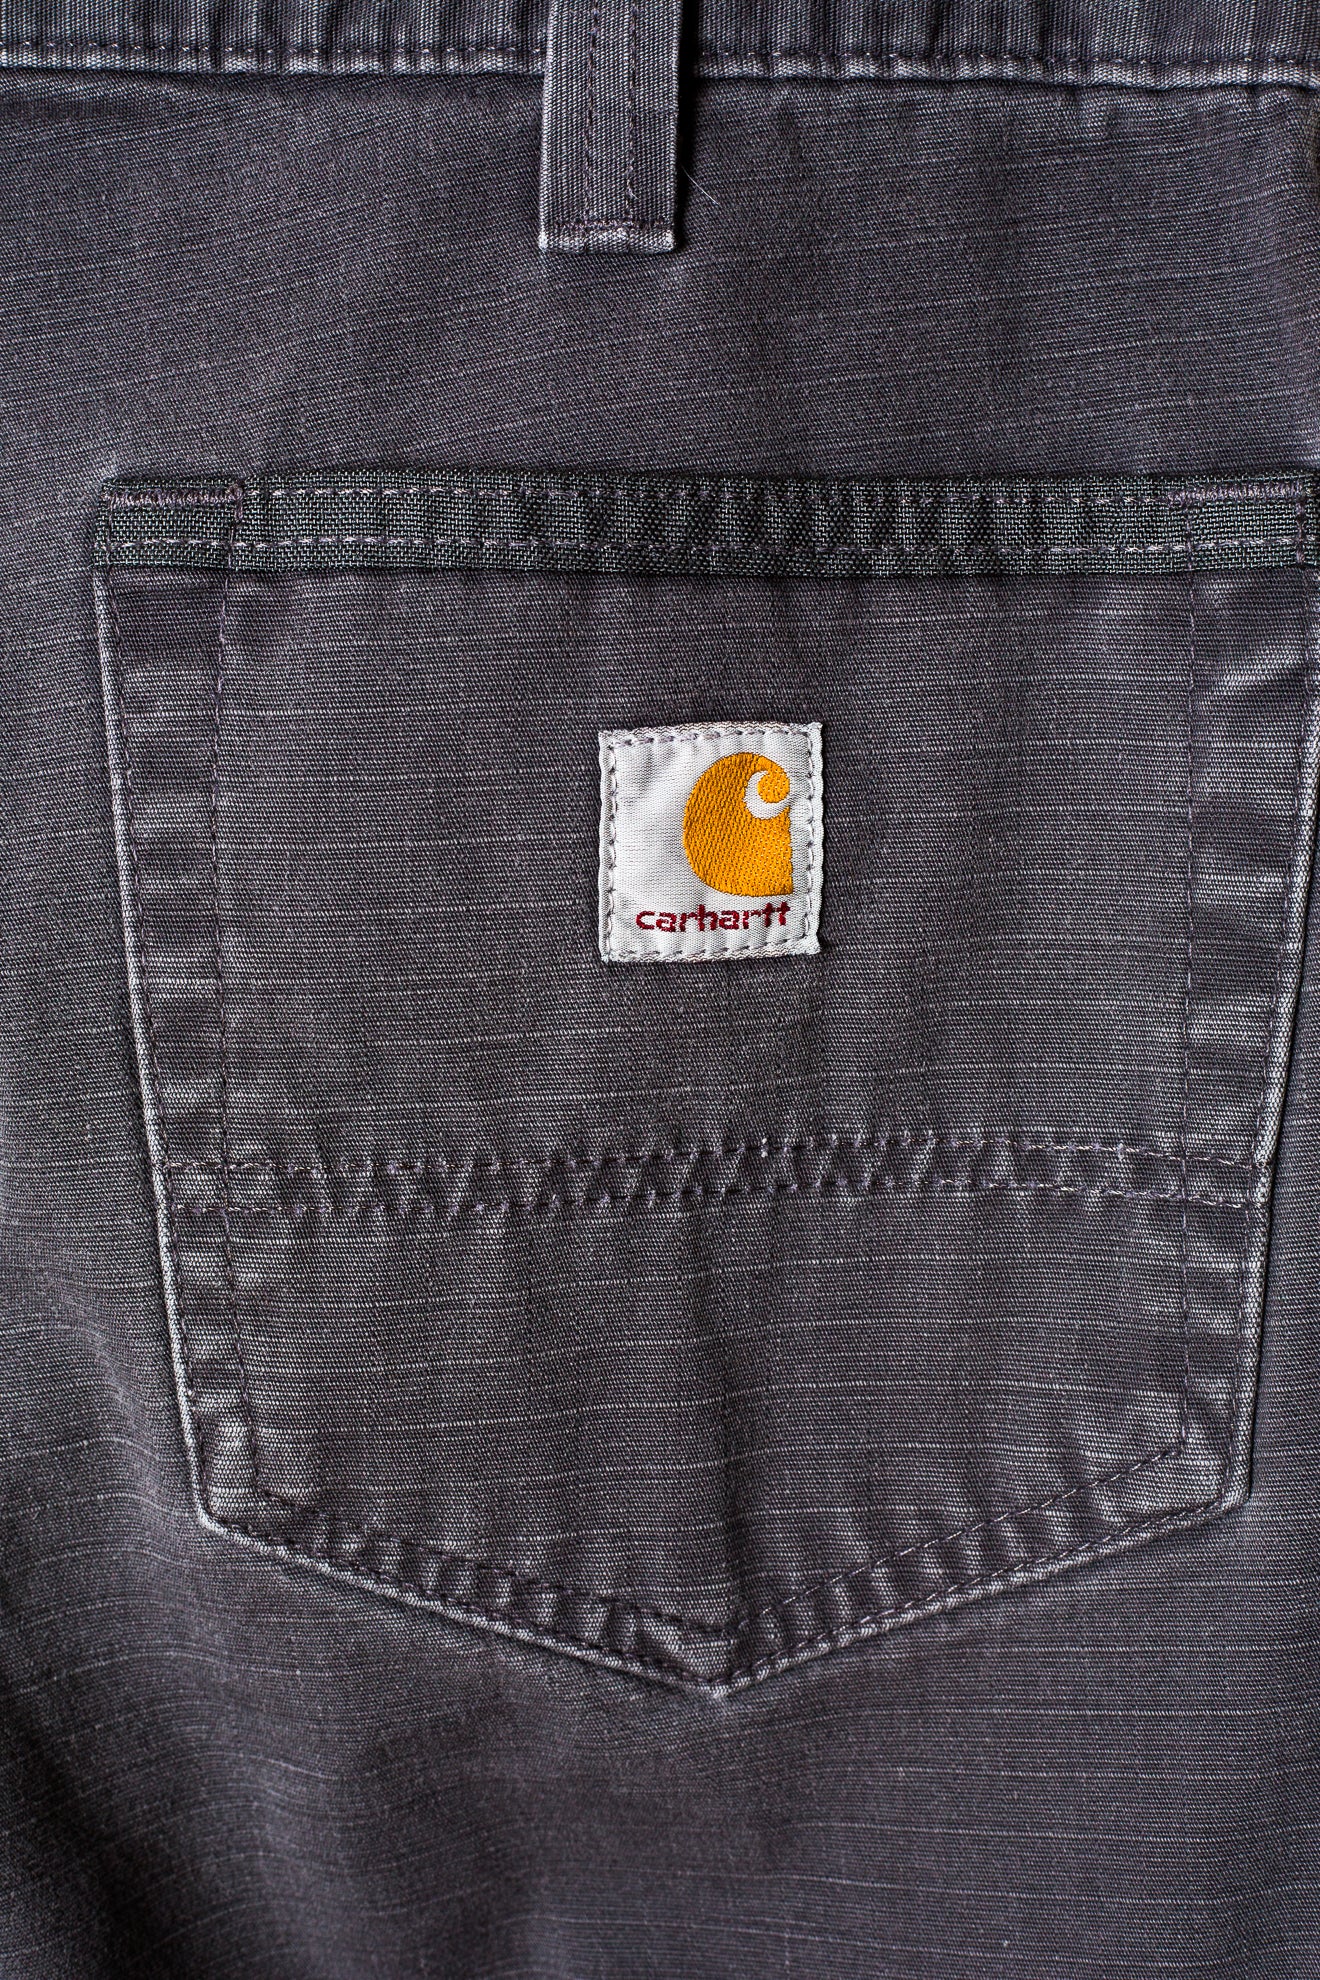 grijze-carhartt-jeans-wit-logo